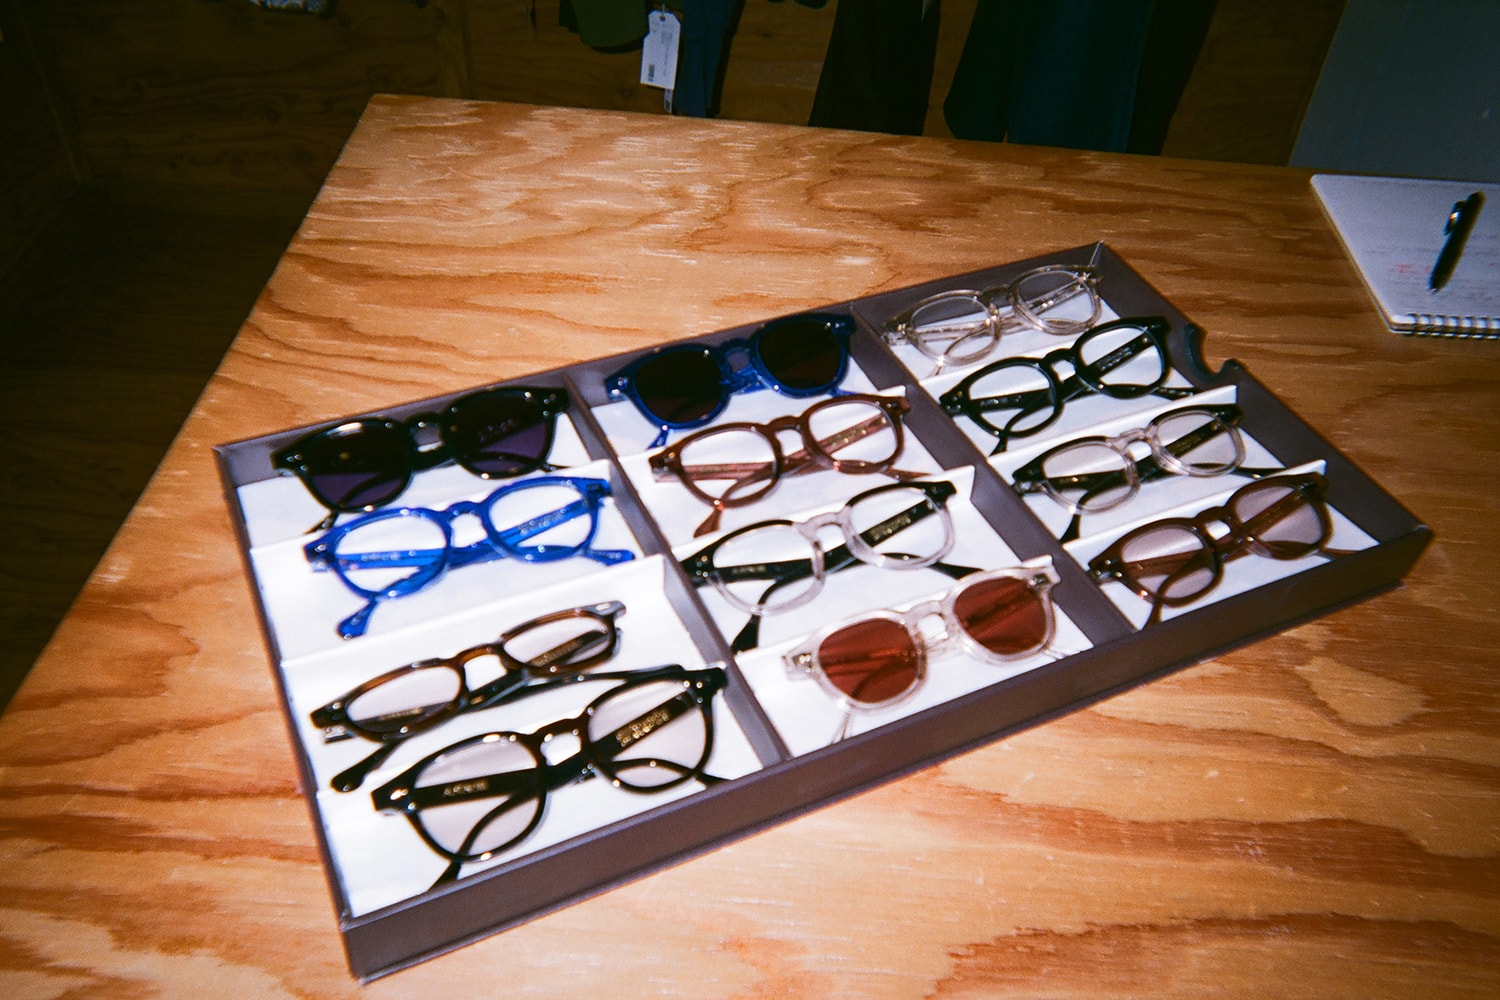 Manual Exposure: Native Sons 主理人 Tommy O’Gara 用镜头记录眼镜制造的幕后工序